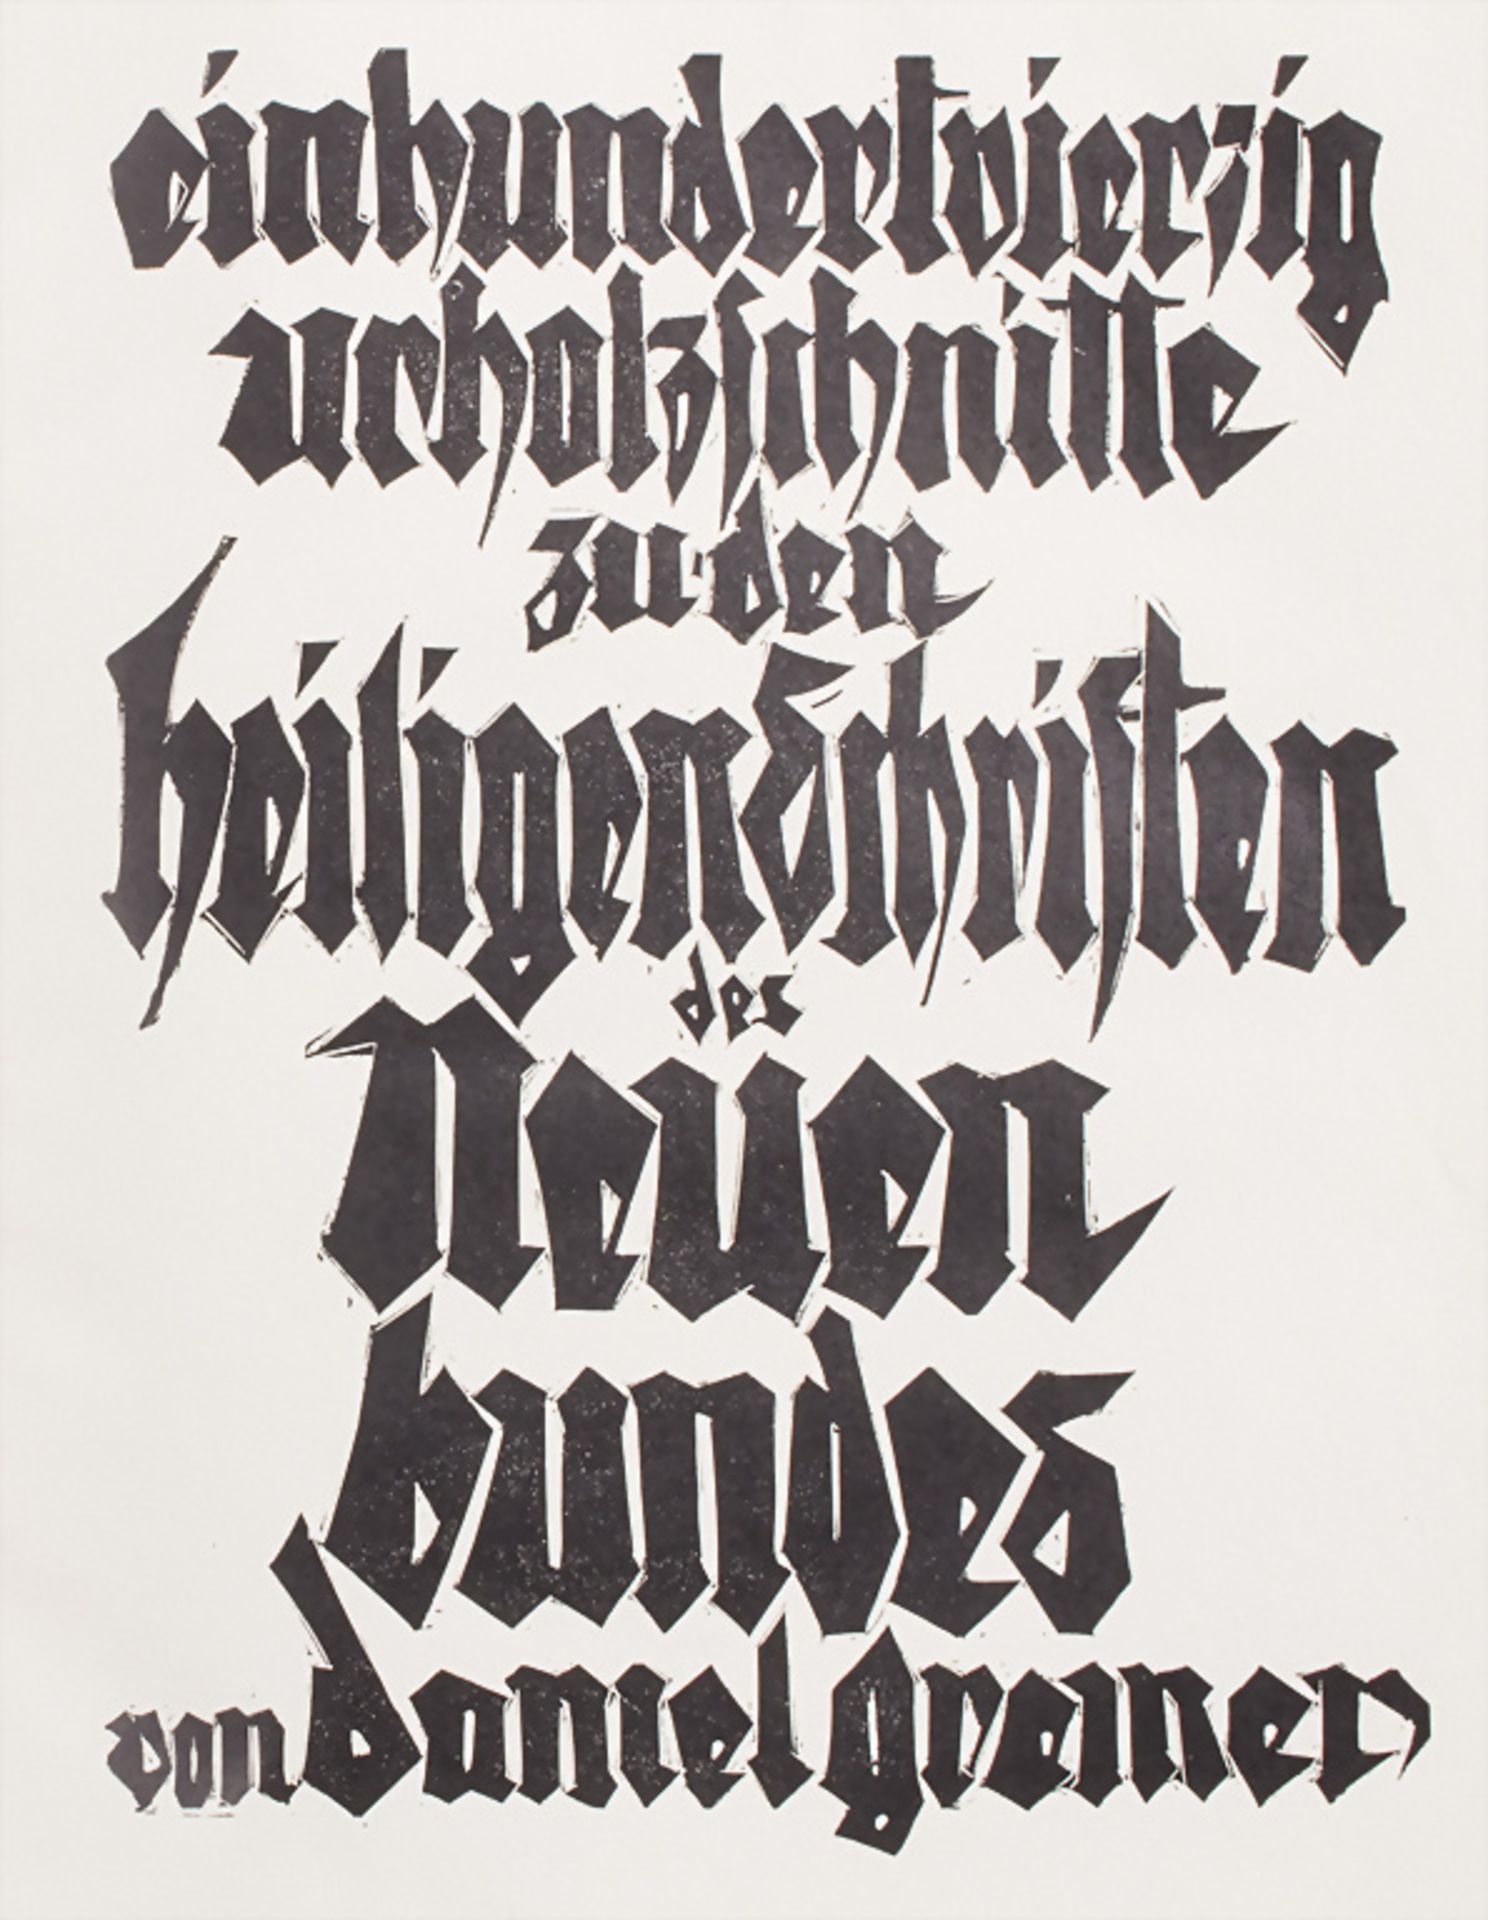 Daniel Greiner (1872-1943) 'Greinerbibel' Bd. 1/3 / 'Greiner Bible' vol. 1/3, 1931